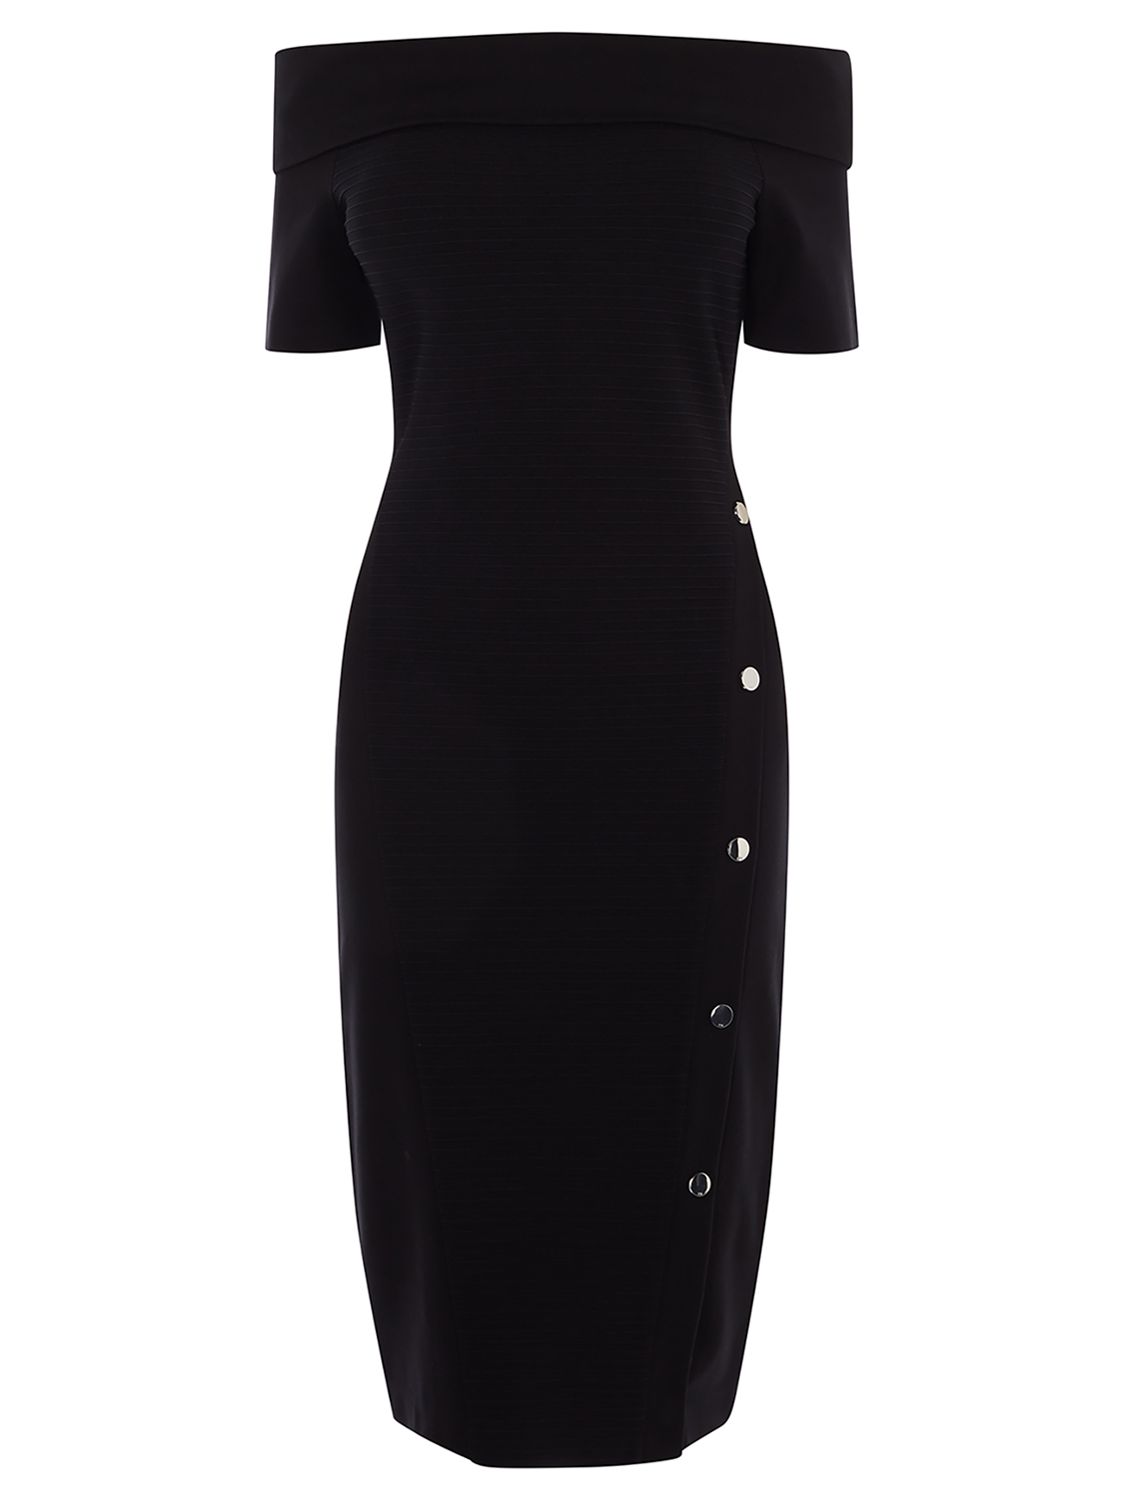 Karen Millen Bardot Popper Dress, Black